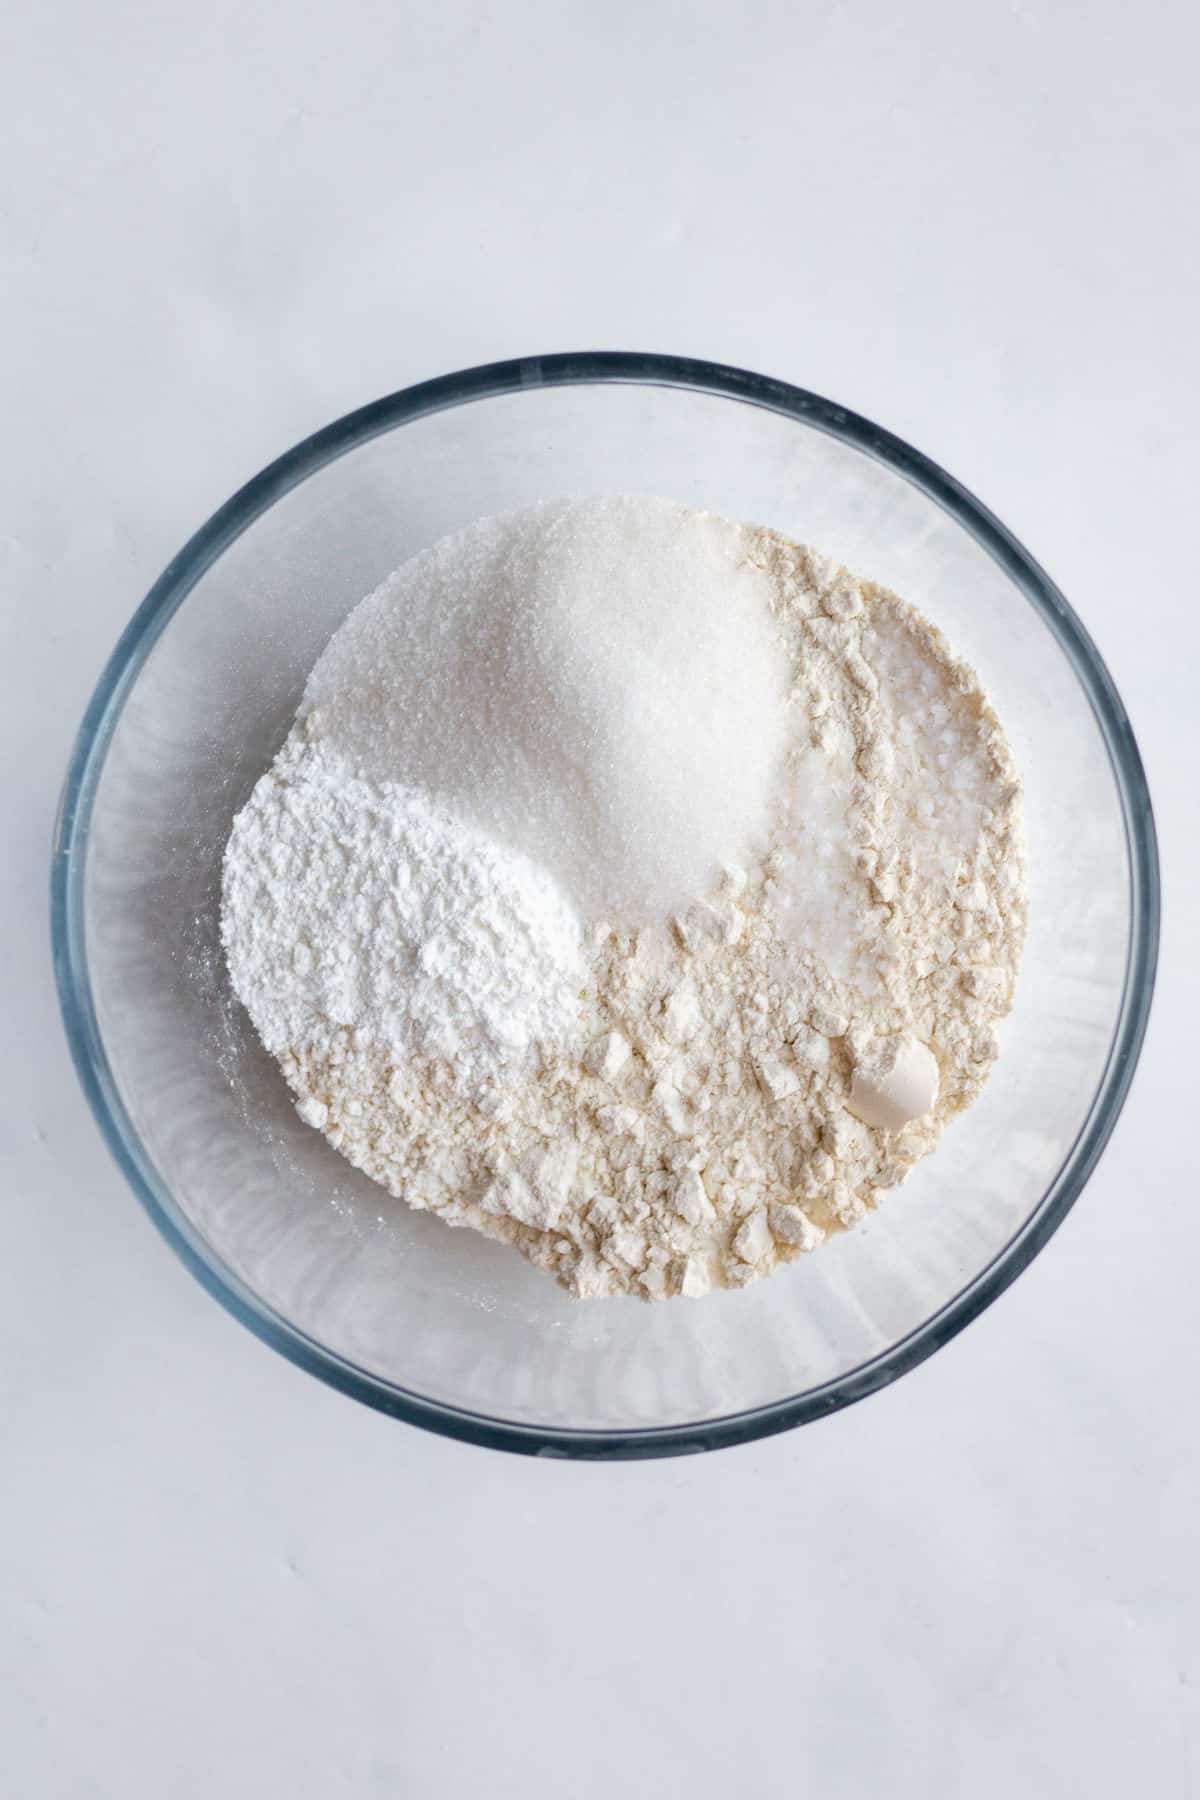 sugar, salt, flour, and baking powder in a mixing bowl